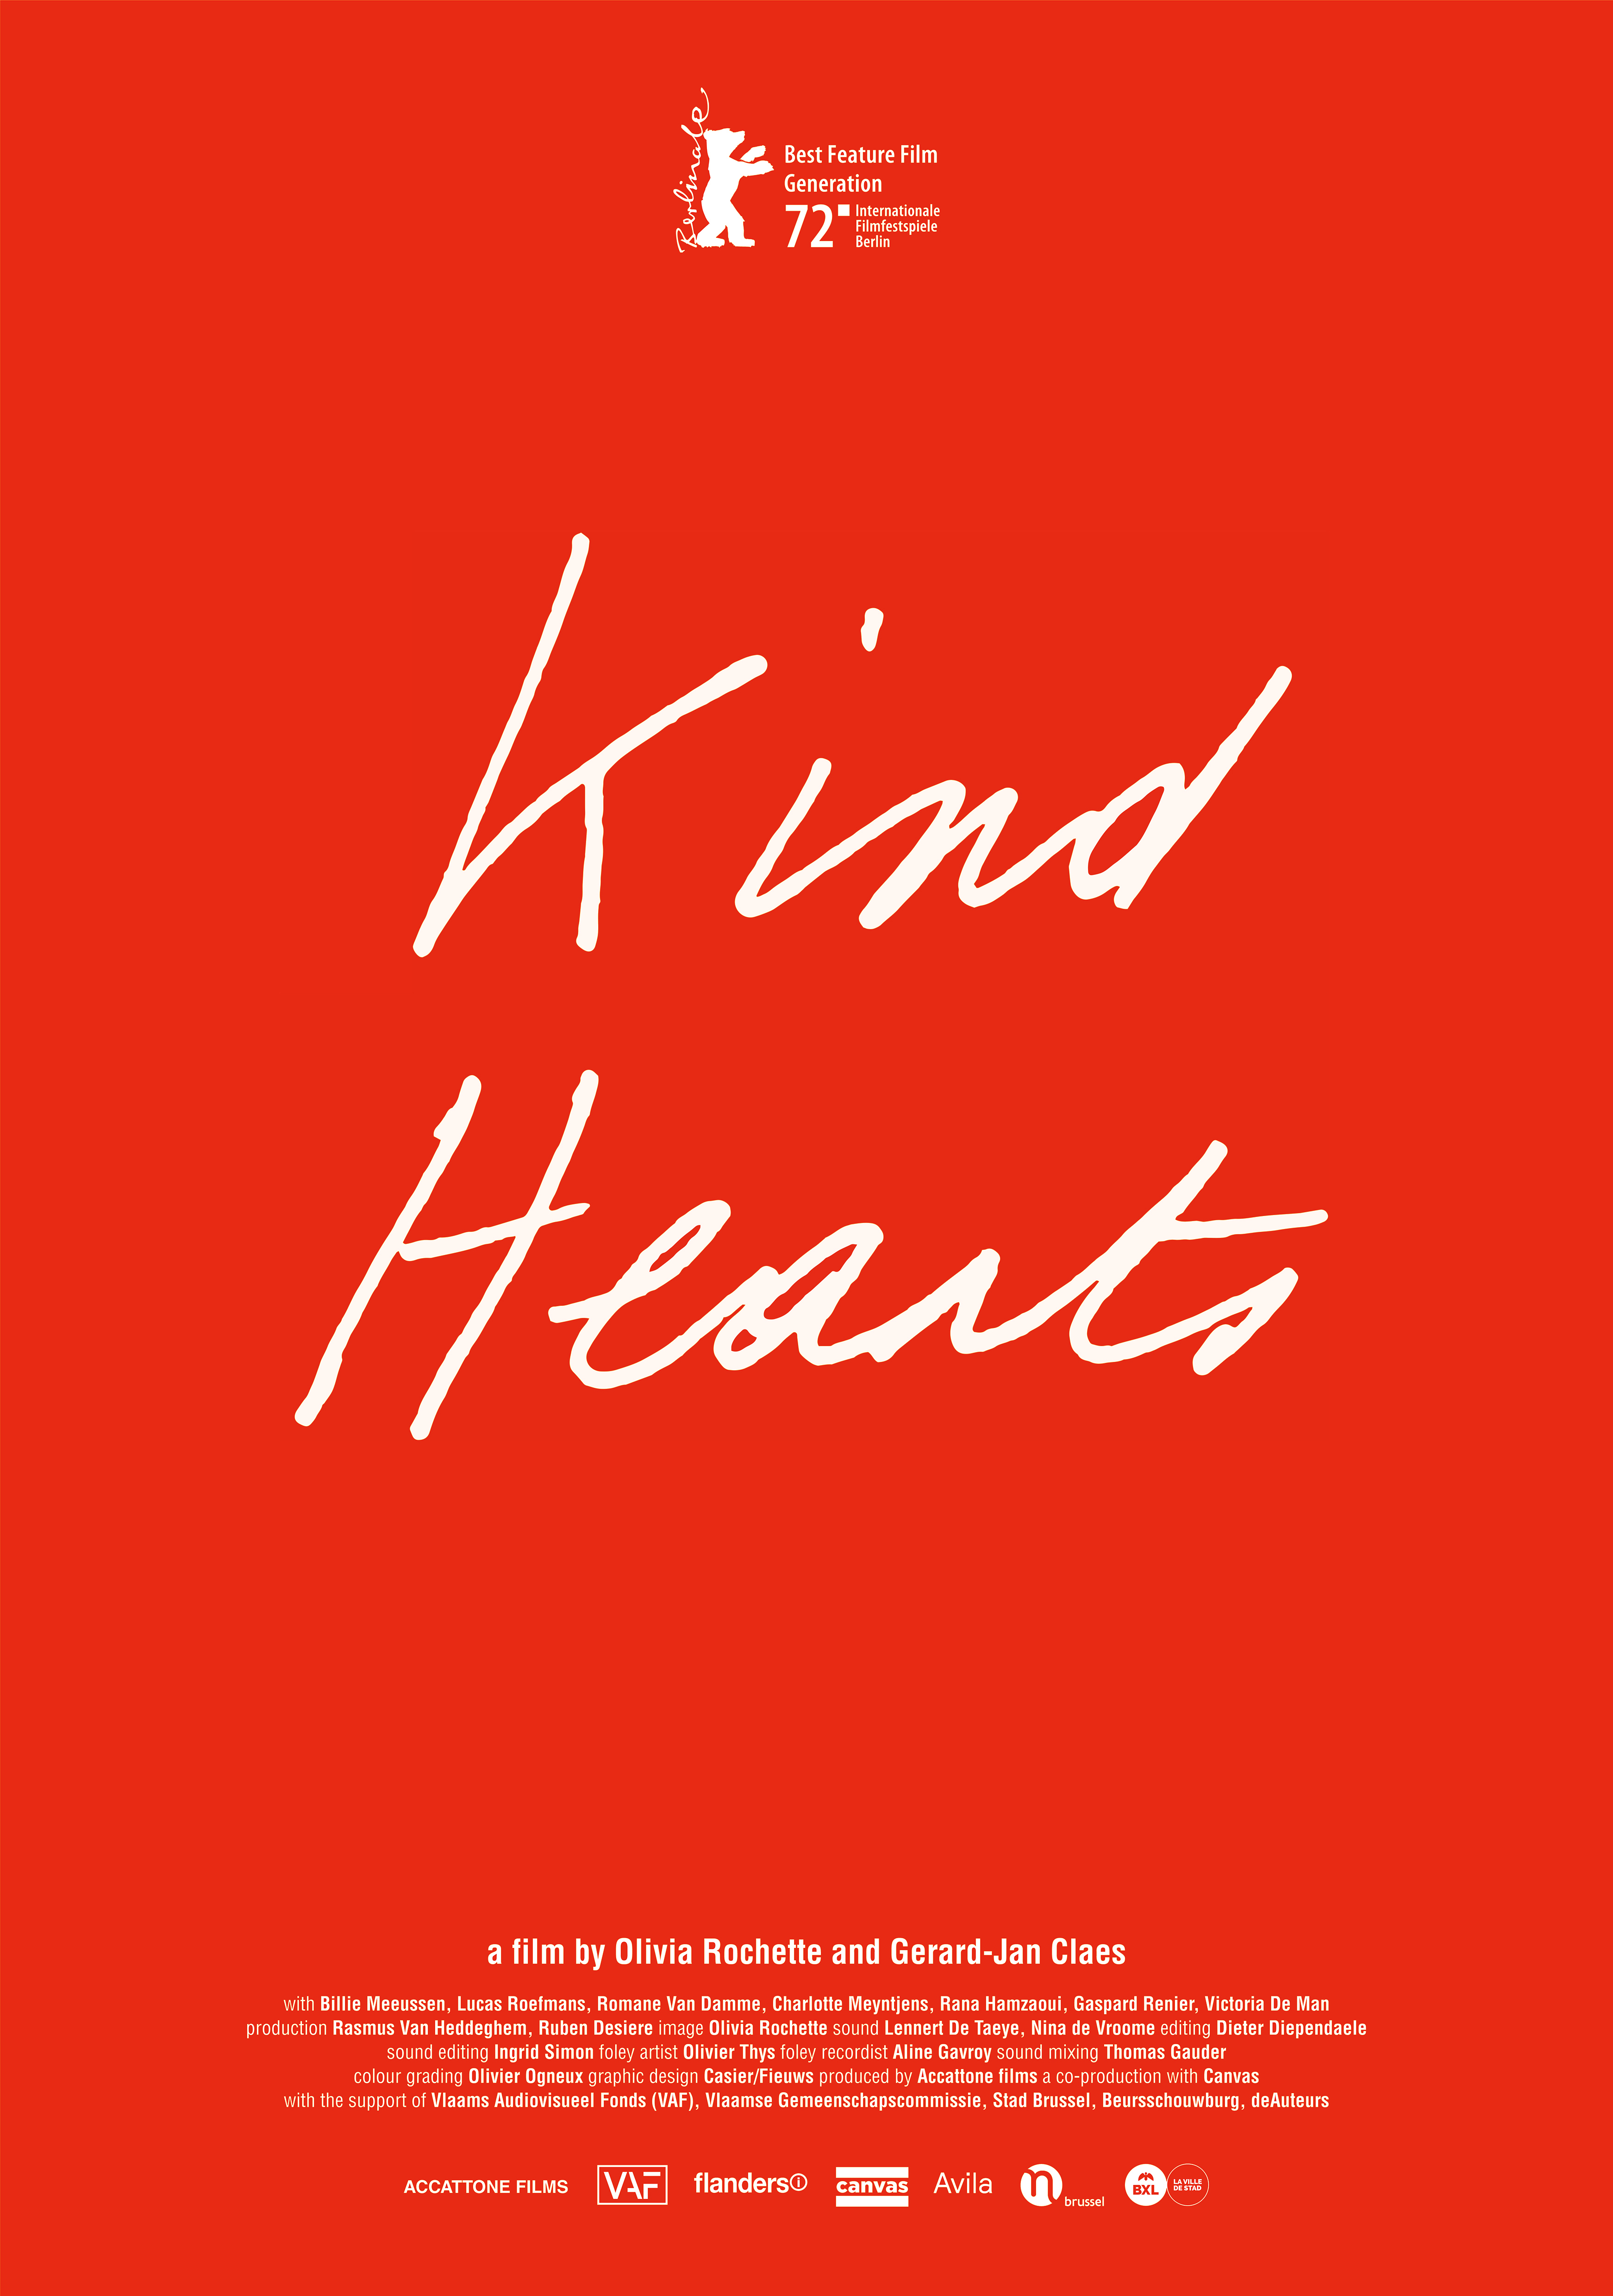 Kind Hearts (Olivia Rochette & Gerard-Jan Claes, 2022)